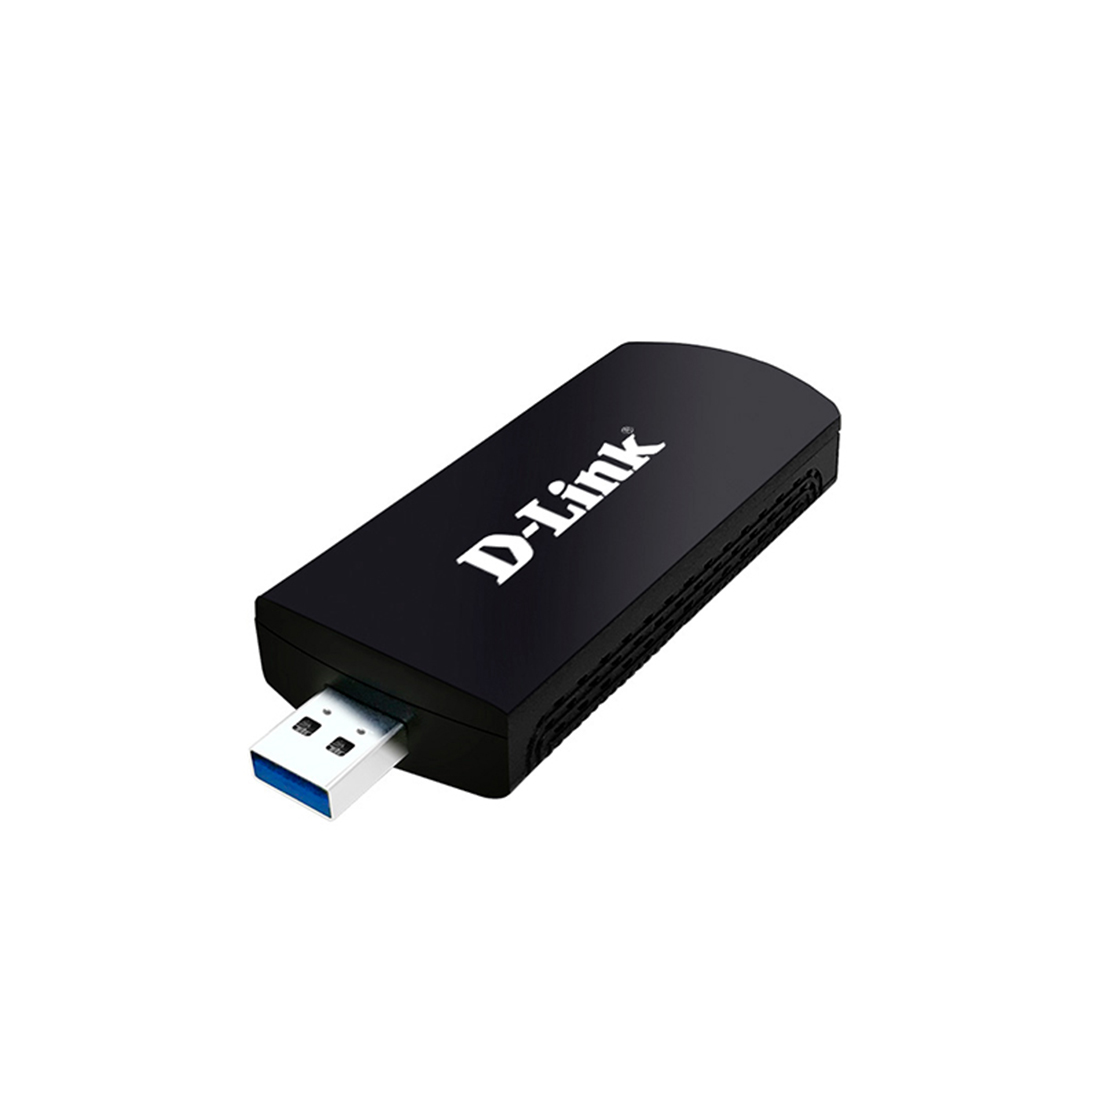 USB адаптер, D-Link, DWA-192/RU/B1A, Беспроводной двухдиапазонный USB 3.0 адаптер 802.11a/b/g/n/ac с